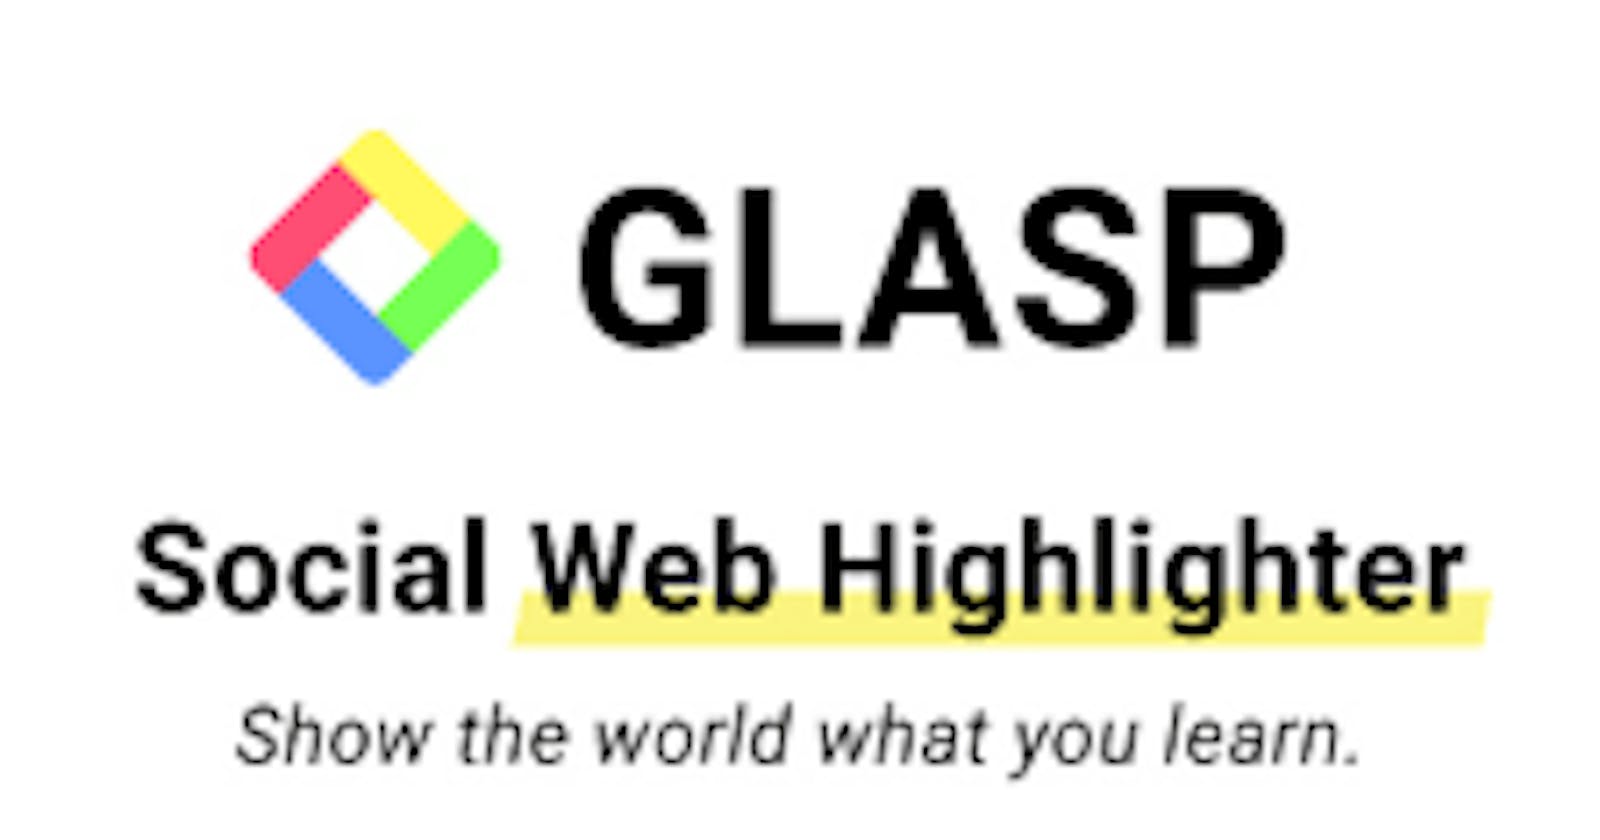 Glasp: A User Guide